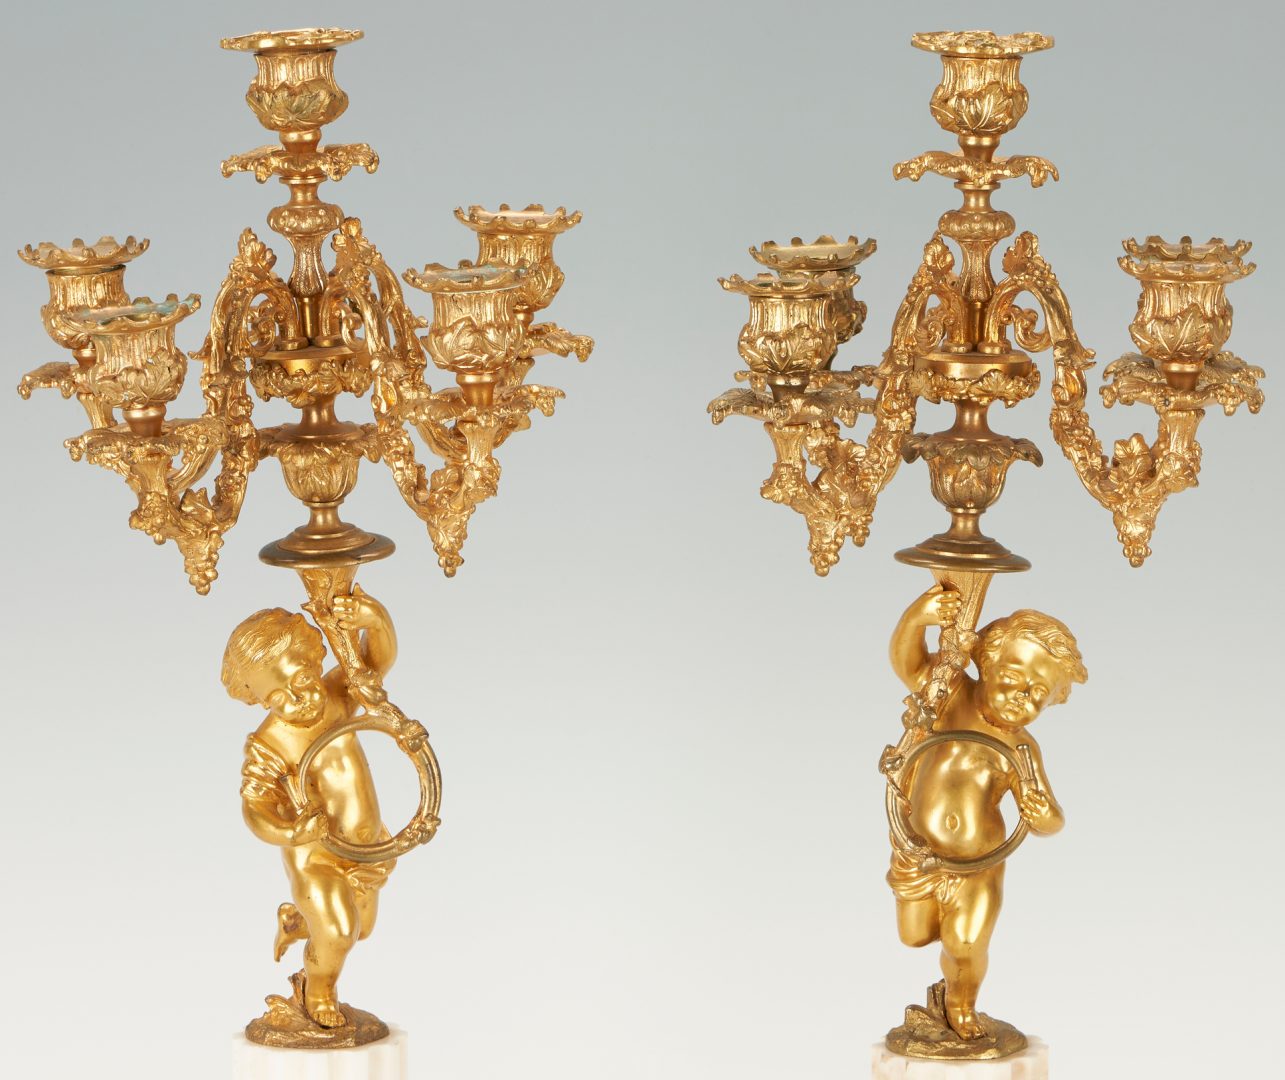 Lot 74: Pair of Neoclassical Gilt Bronze Cherub Form Candelabras